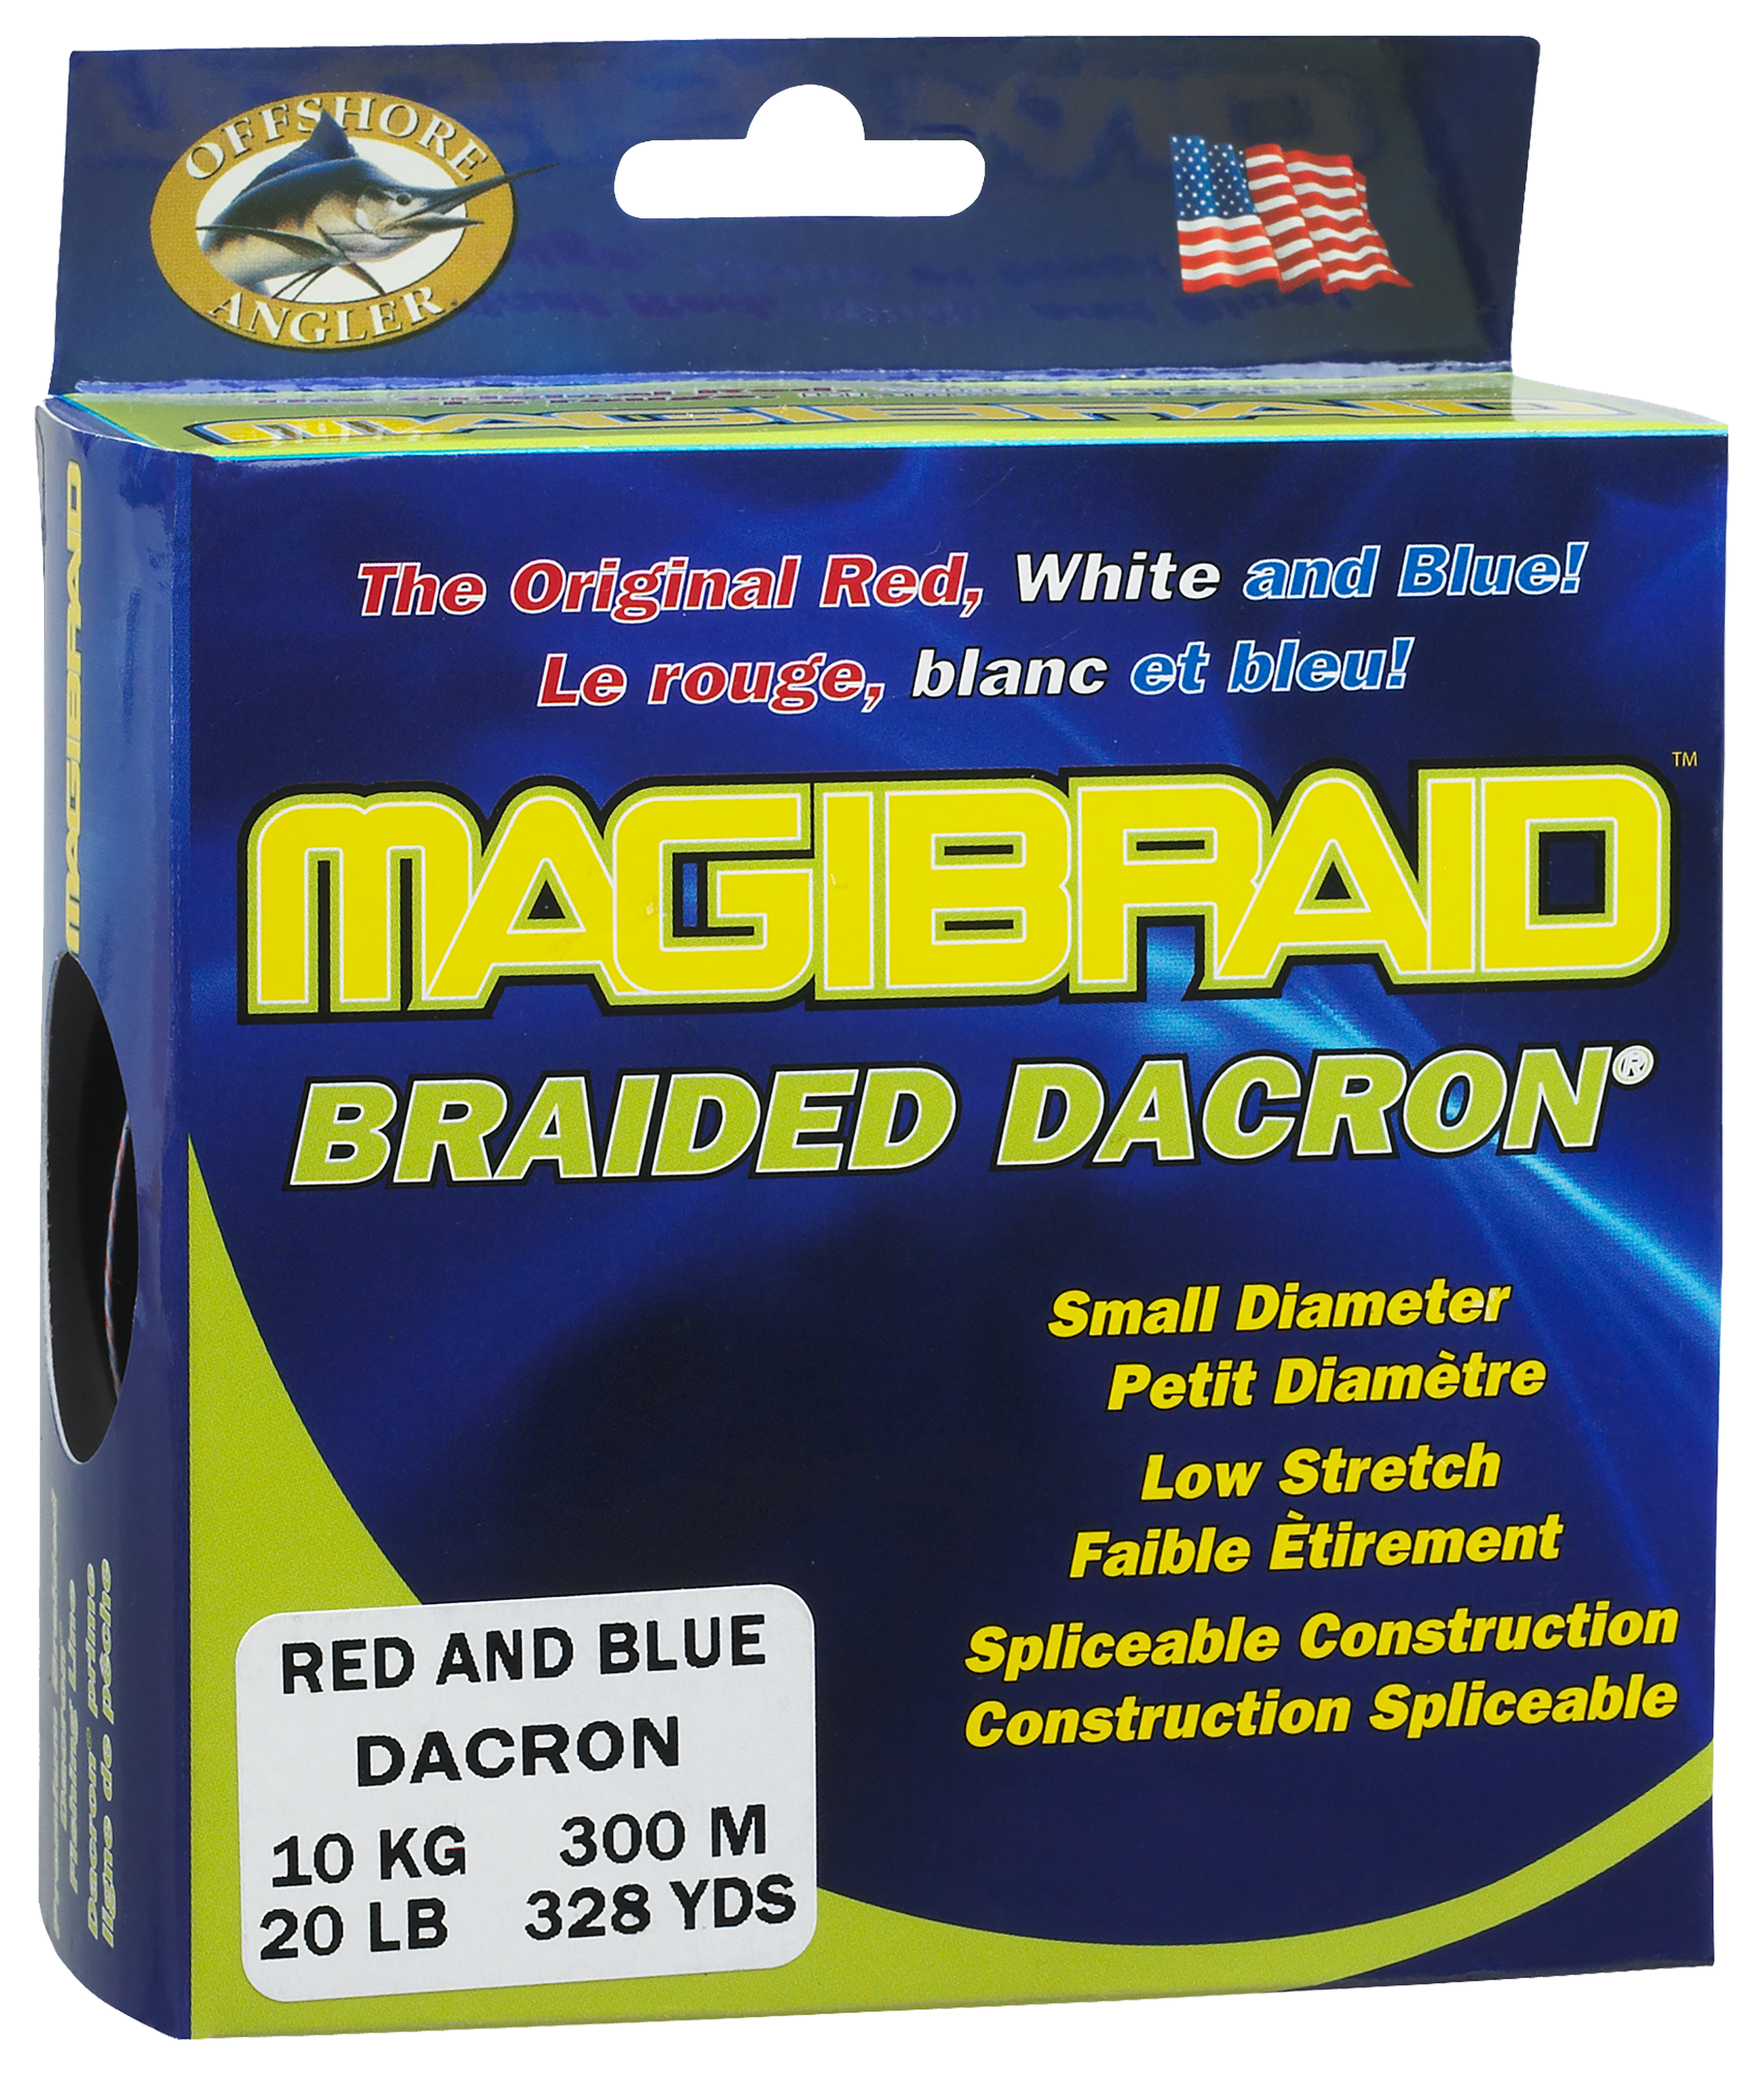 Tuf-Line Braided Dacron Braid - Melton Tackle